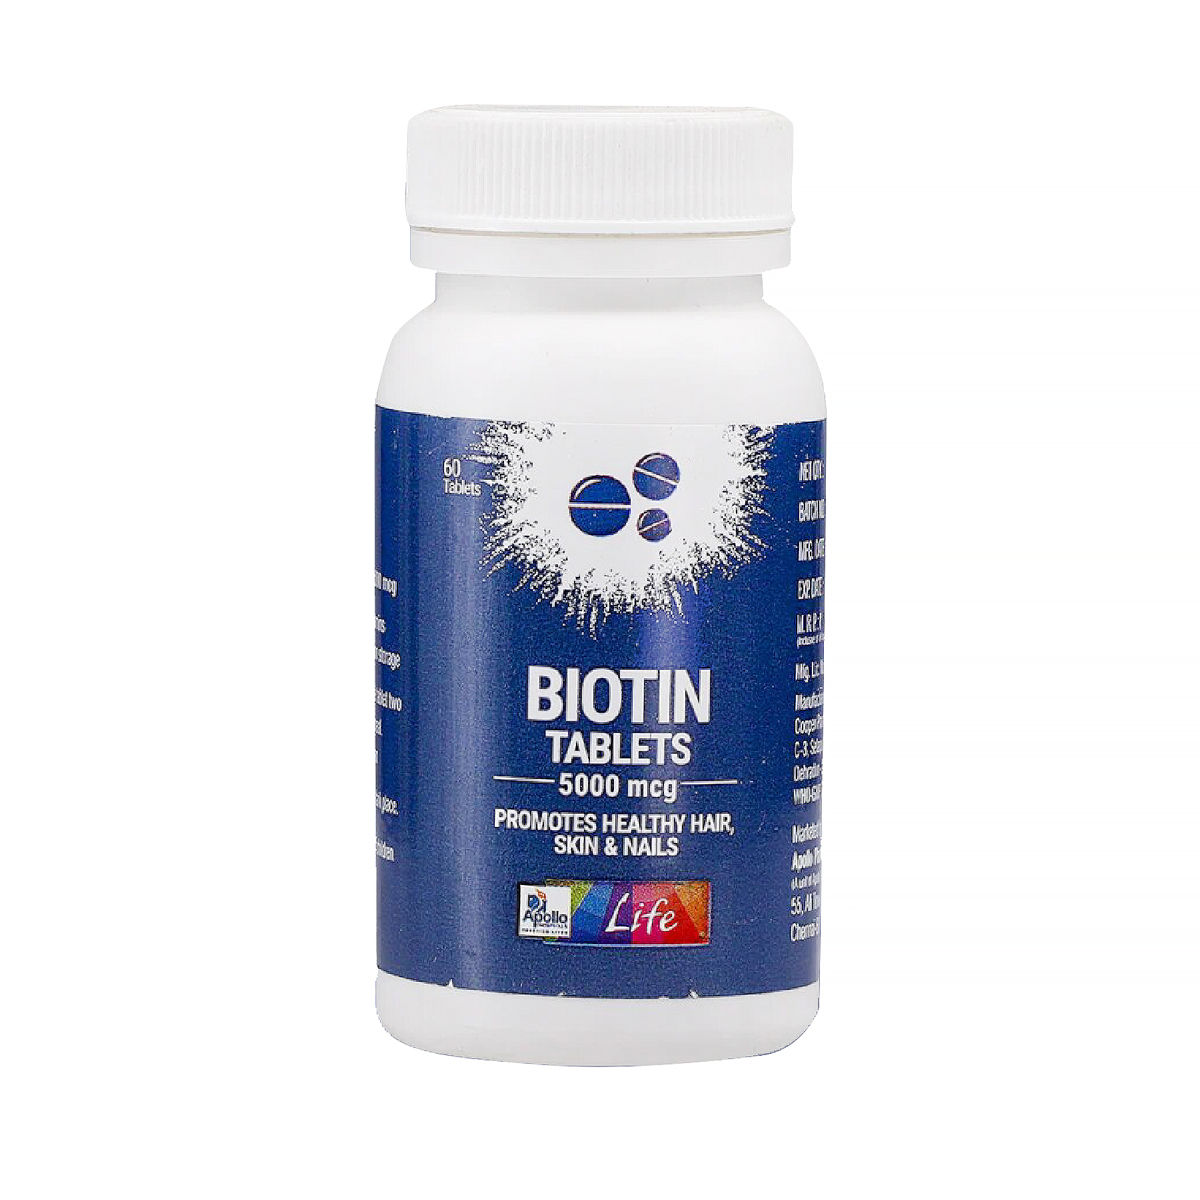 Apollo Life Biotin 5000 mcg, 60 Tablets Price, Uses, Side Effects,  Composition - Apollo Pharmacy